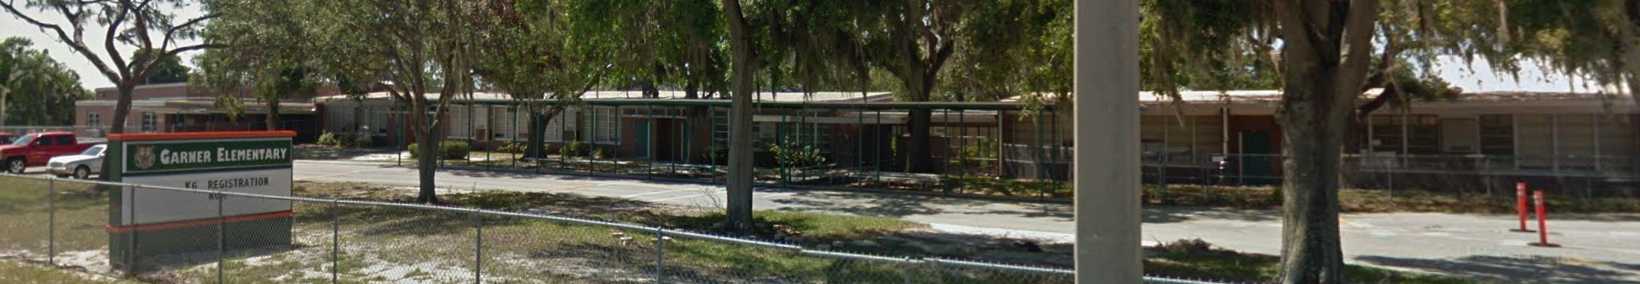 Garner Elementary School